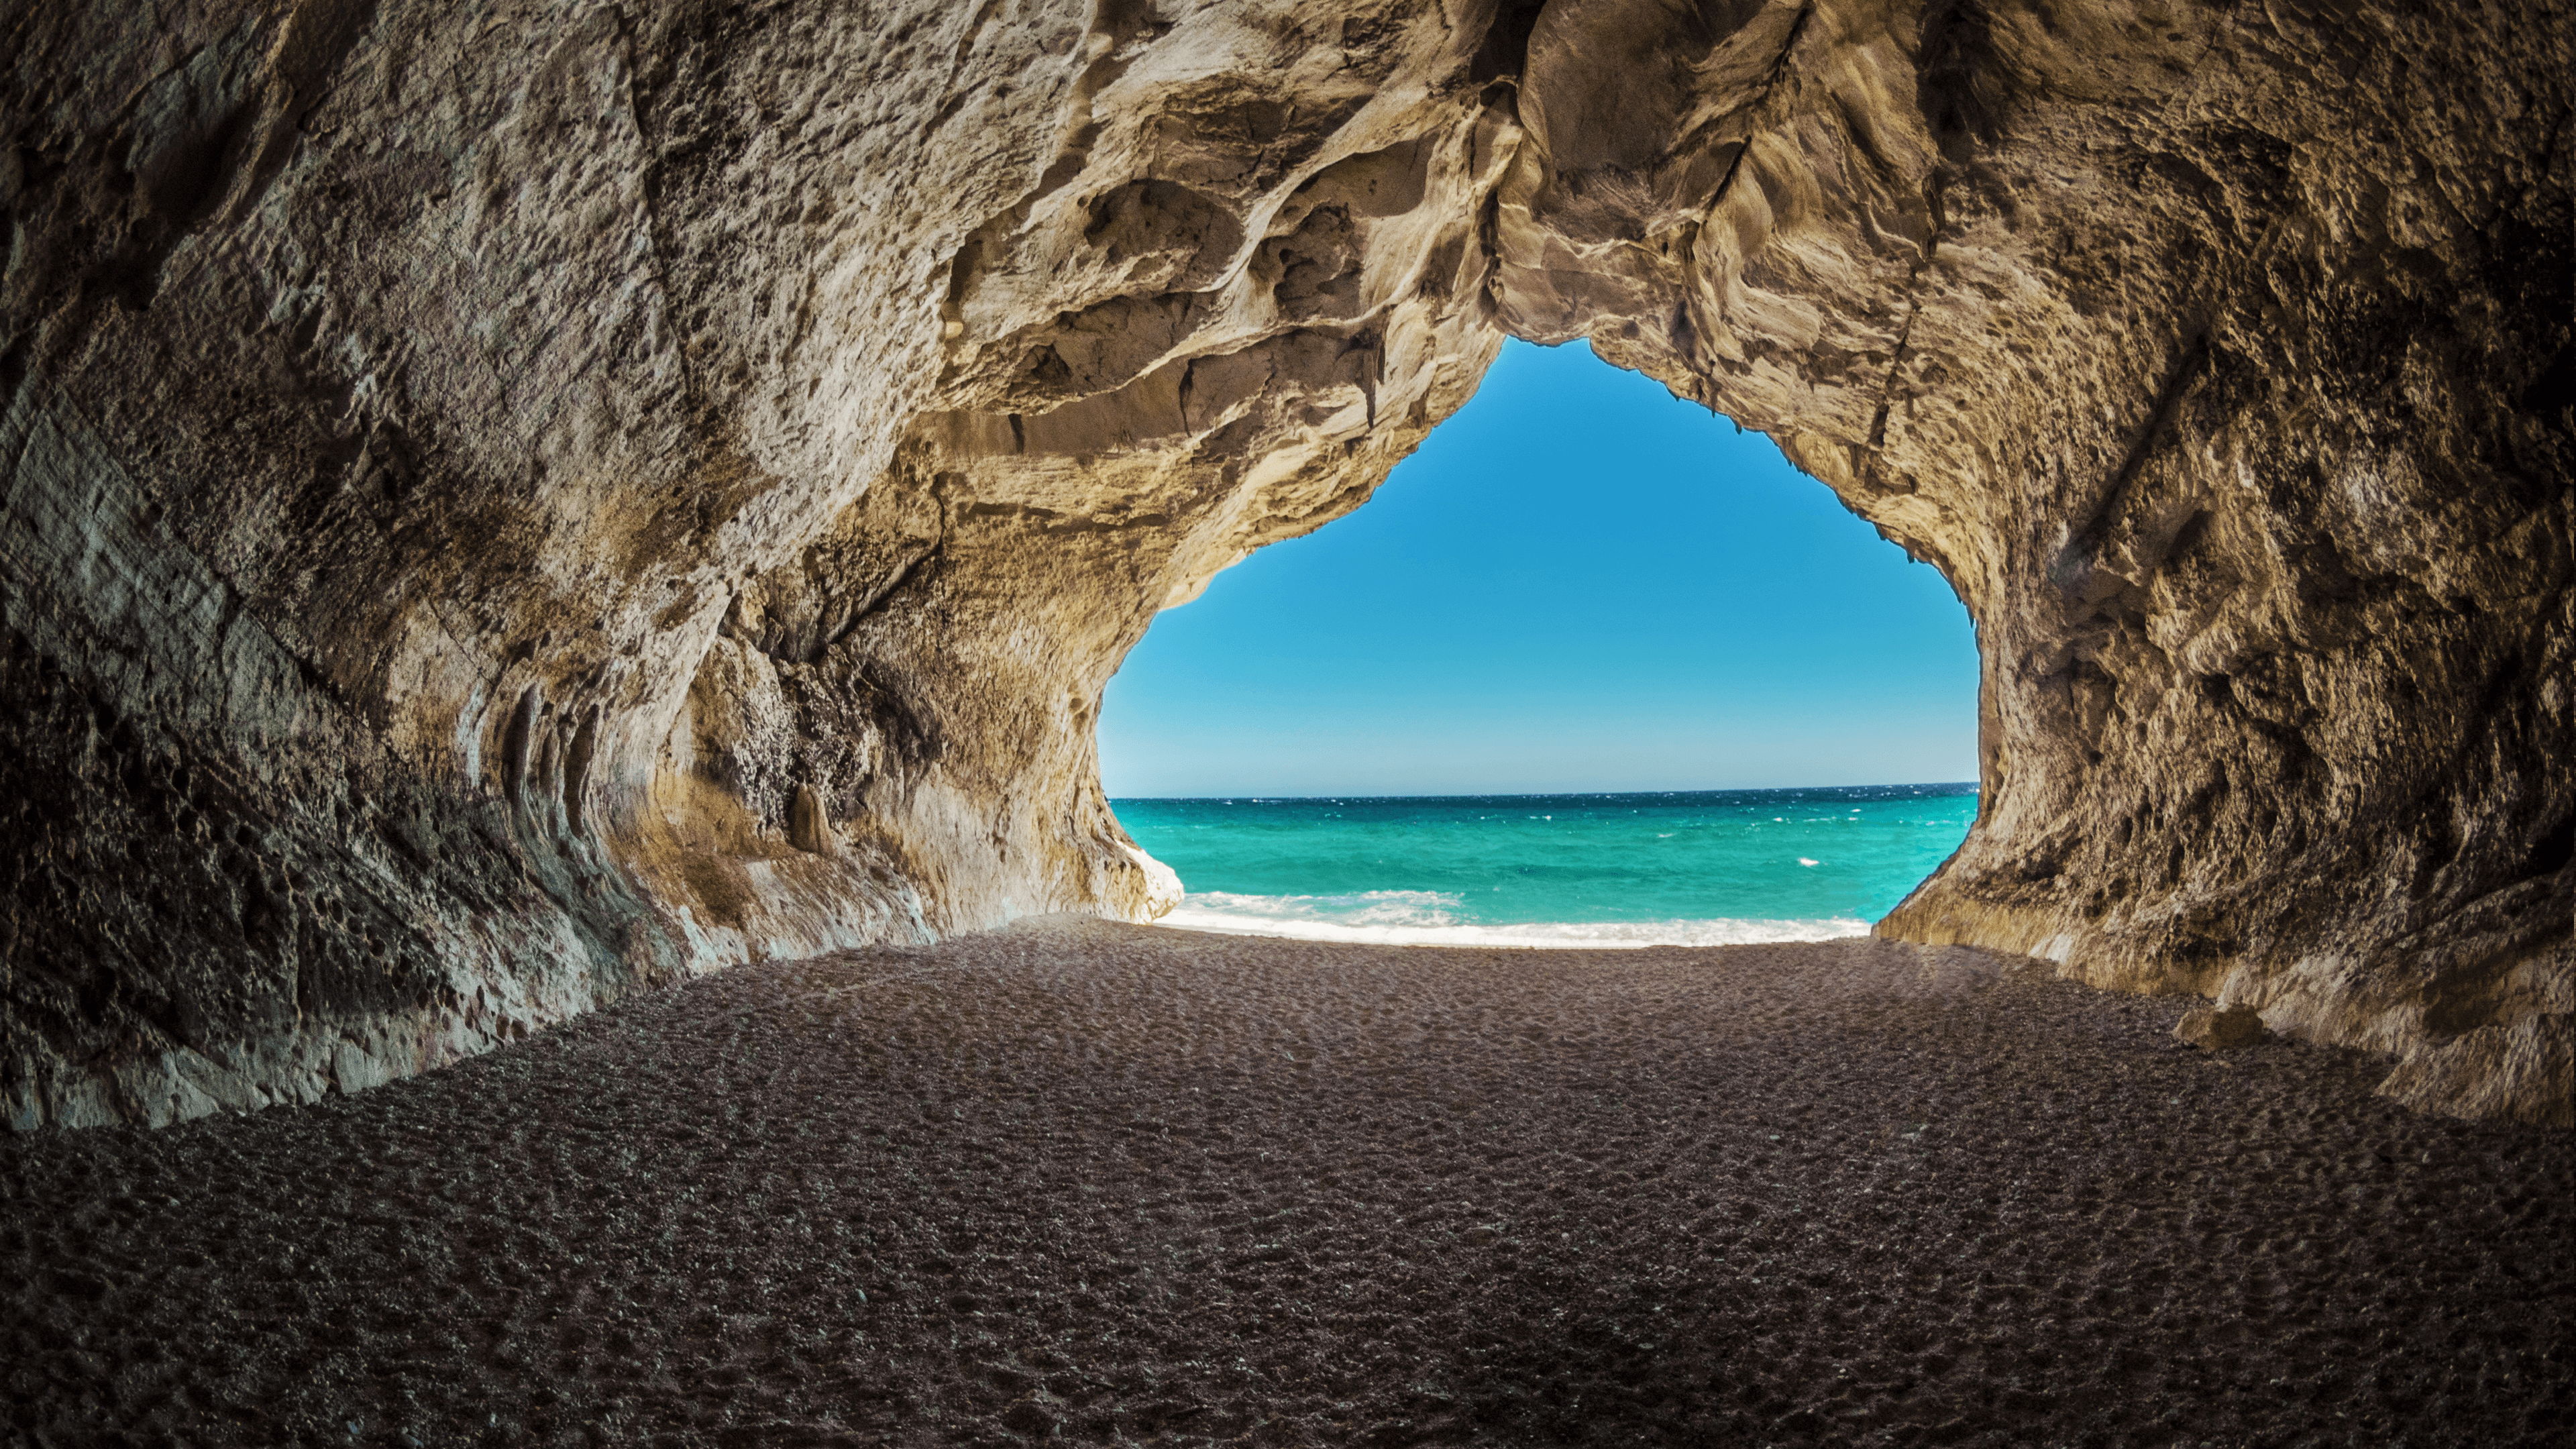 Download Free HD Italian Sea Cave Desktop Wallpaper In 4K .0261